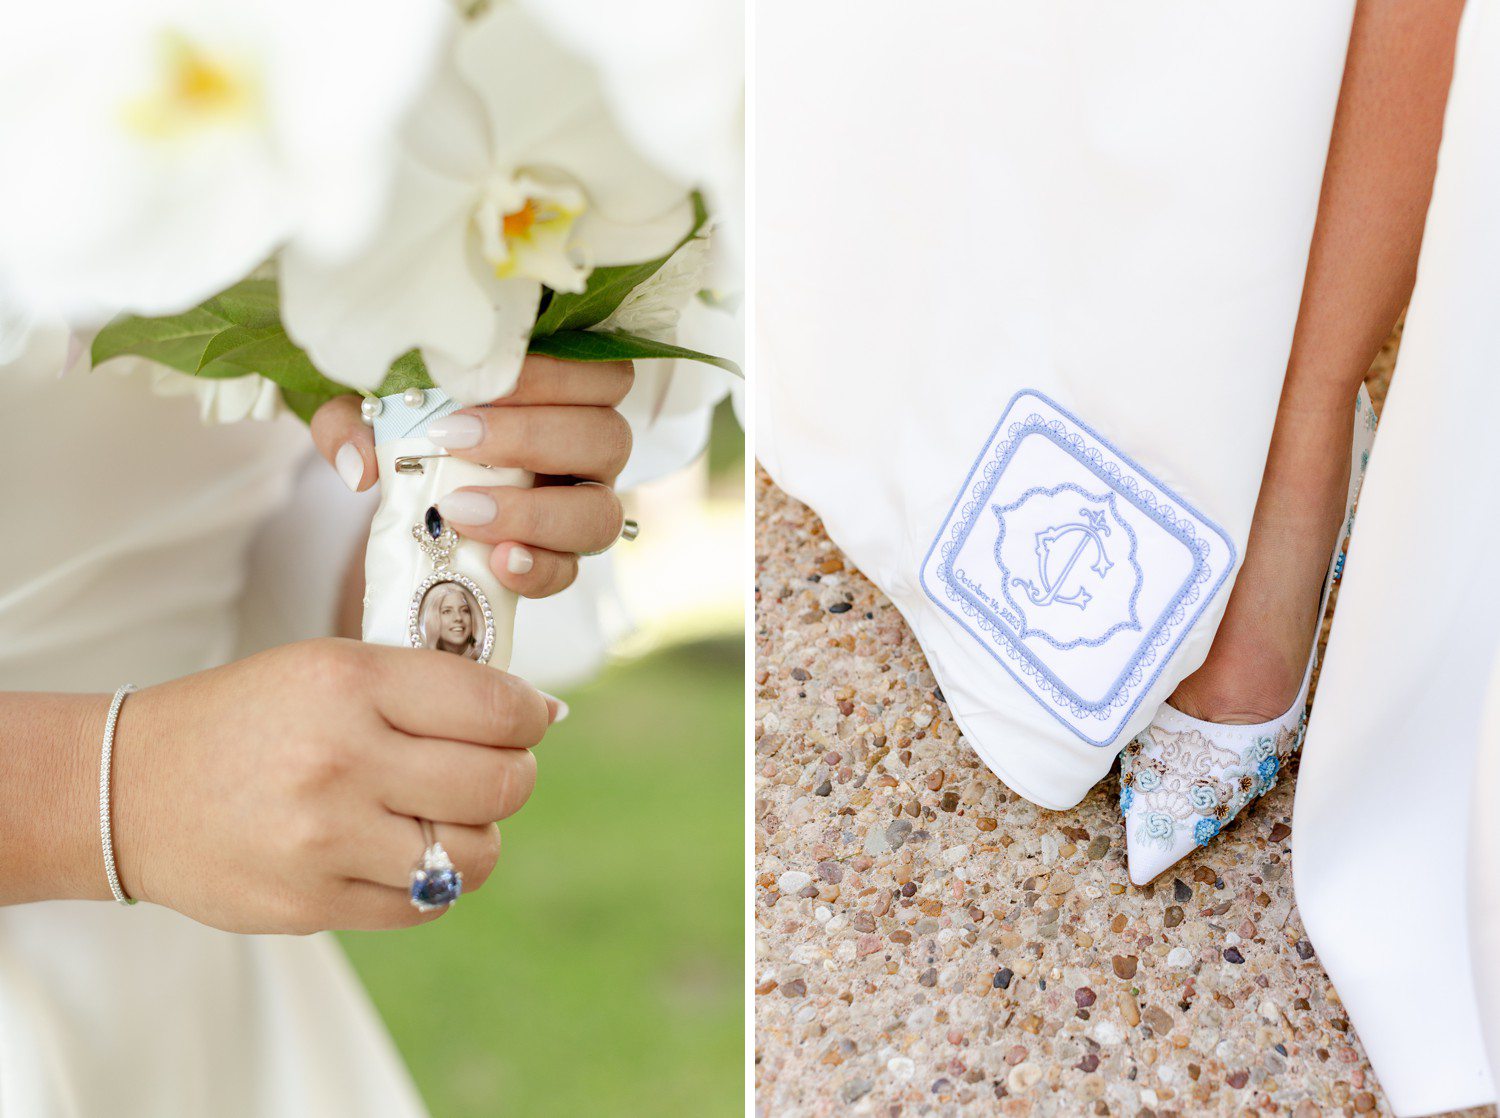 Bridal bouquet and wedding dress details.